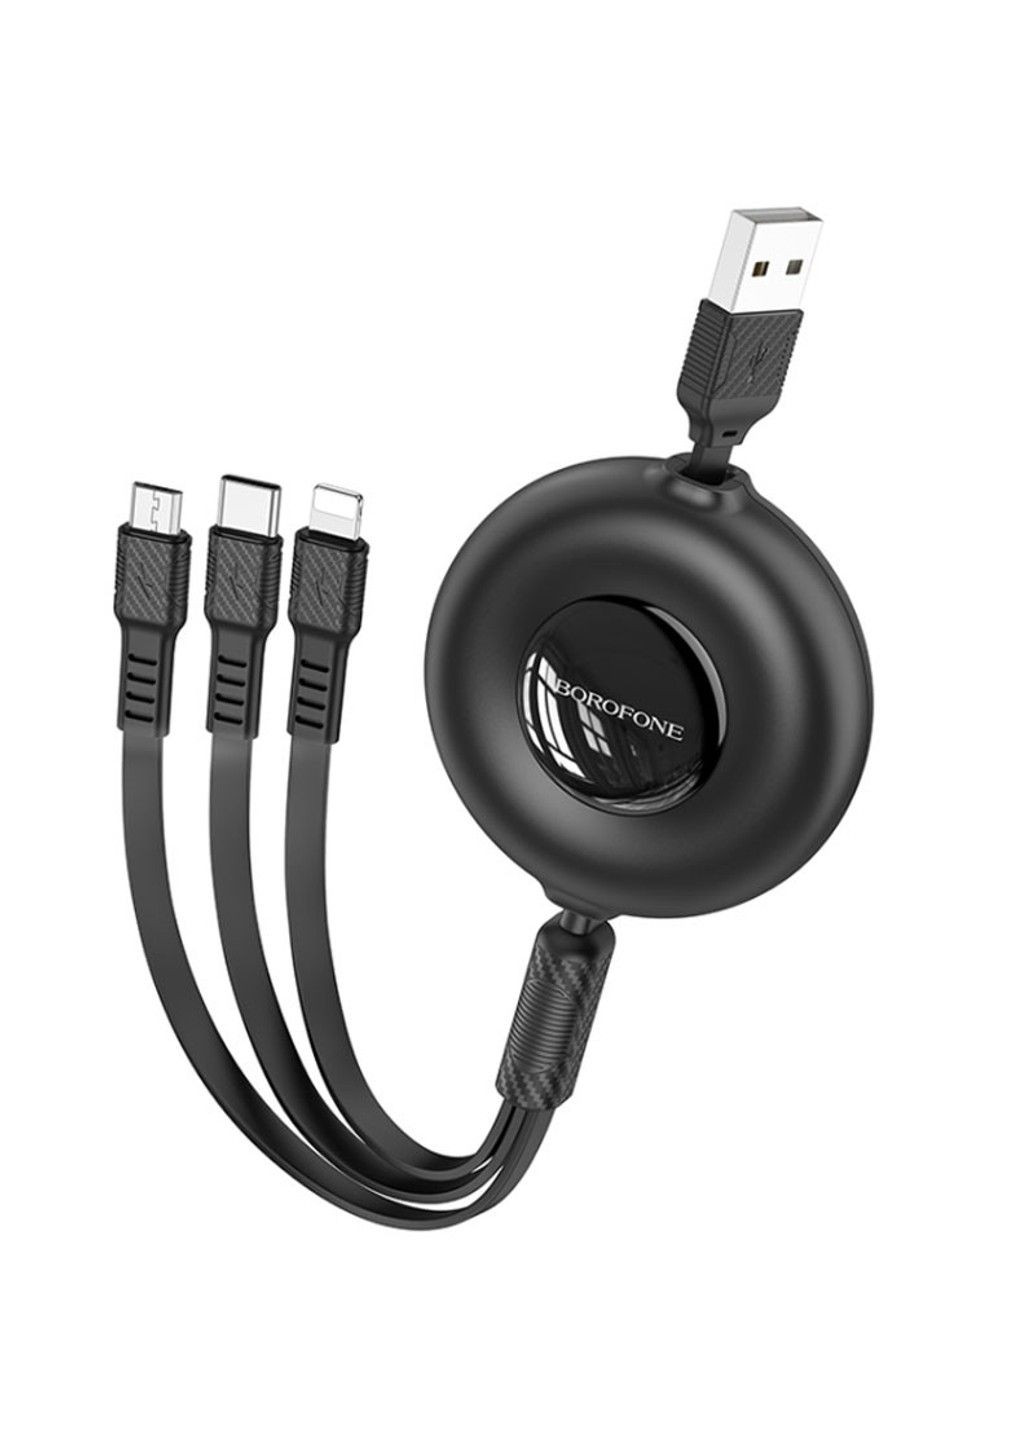 Дата кабель BX74 USB to 3in1 (1m) Borofone (291881120)